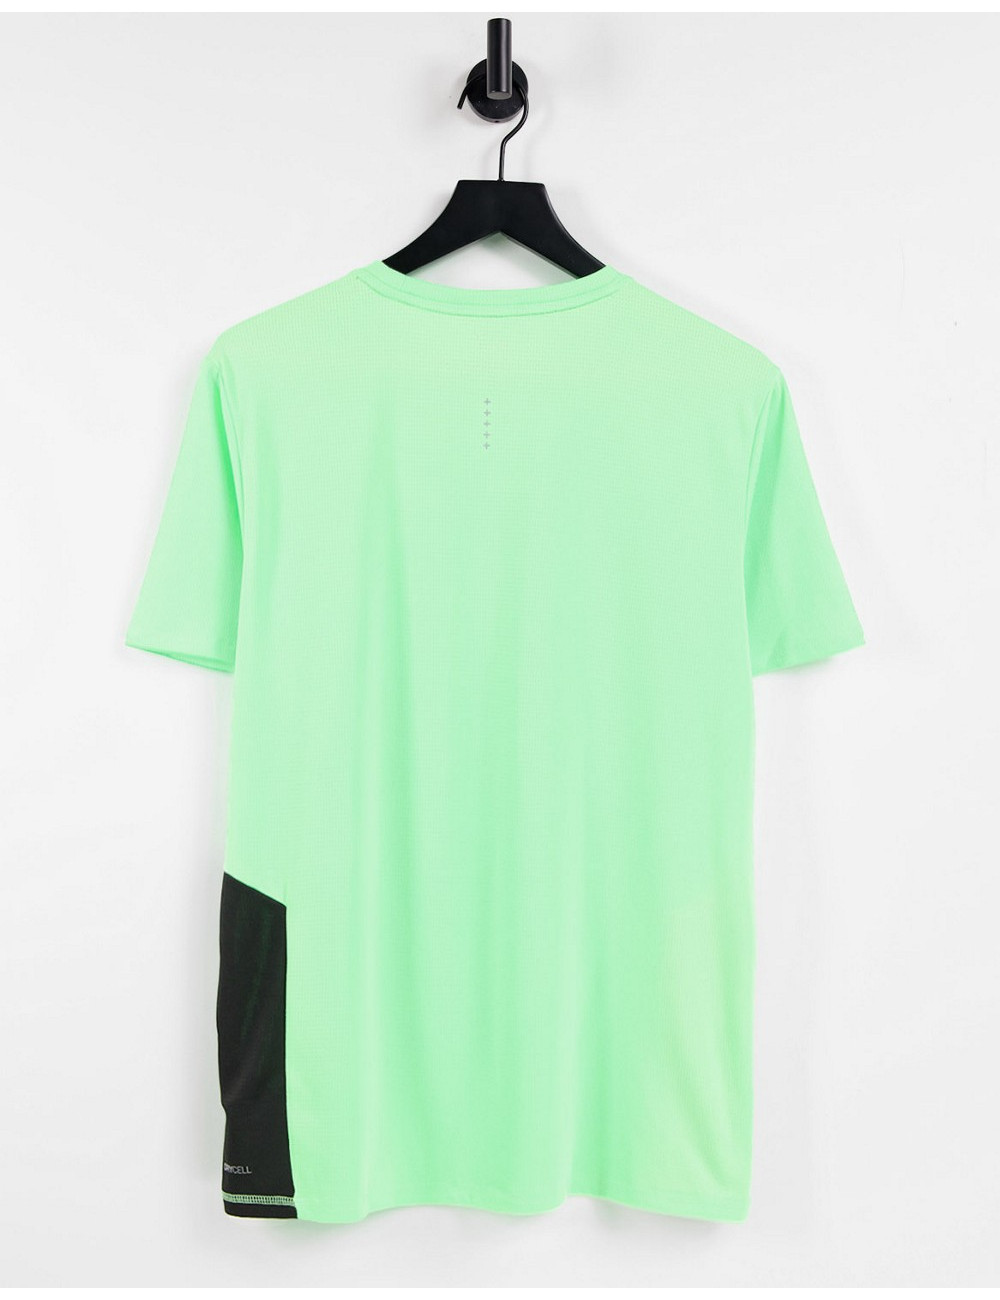 Puma Running t-shirt in green